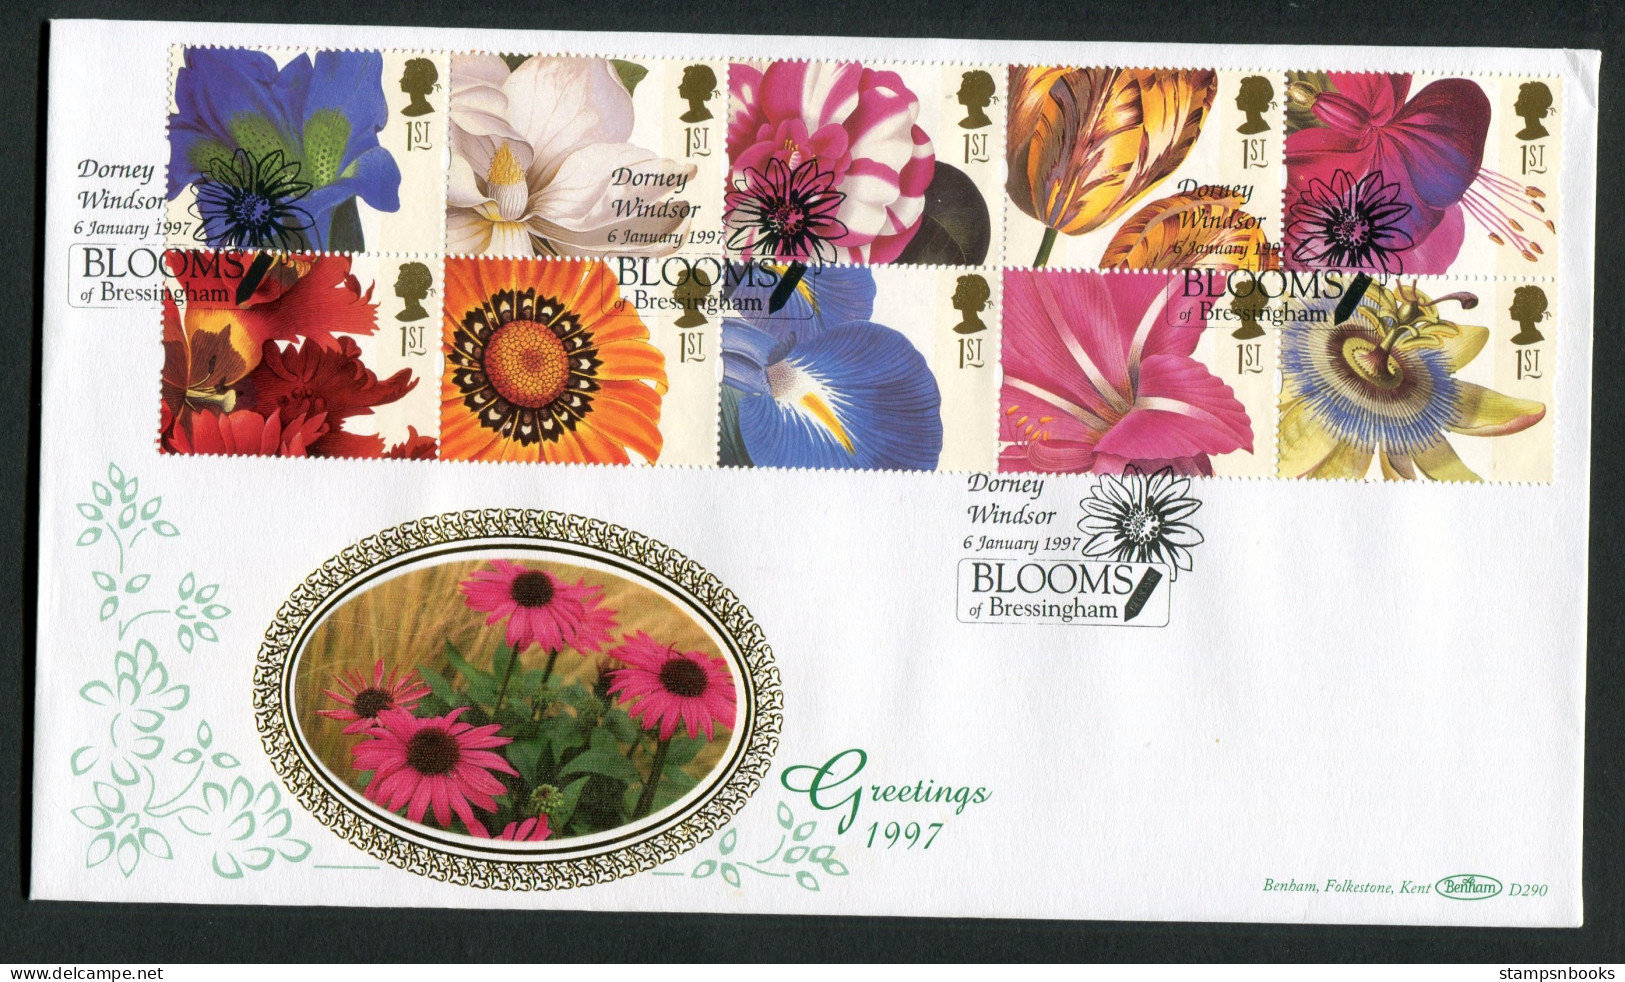 1997 GB Flowers Greeting Stamps First Day Cover, Dorney Windsor Blooms Of Bressingham Benham D290 FDC - 1991-2000 Dezimalausgaben